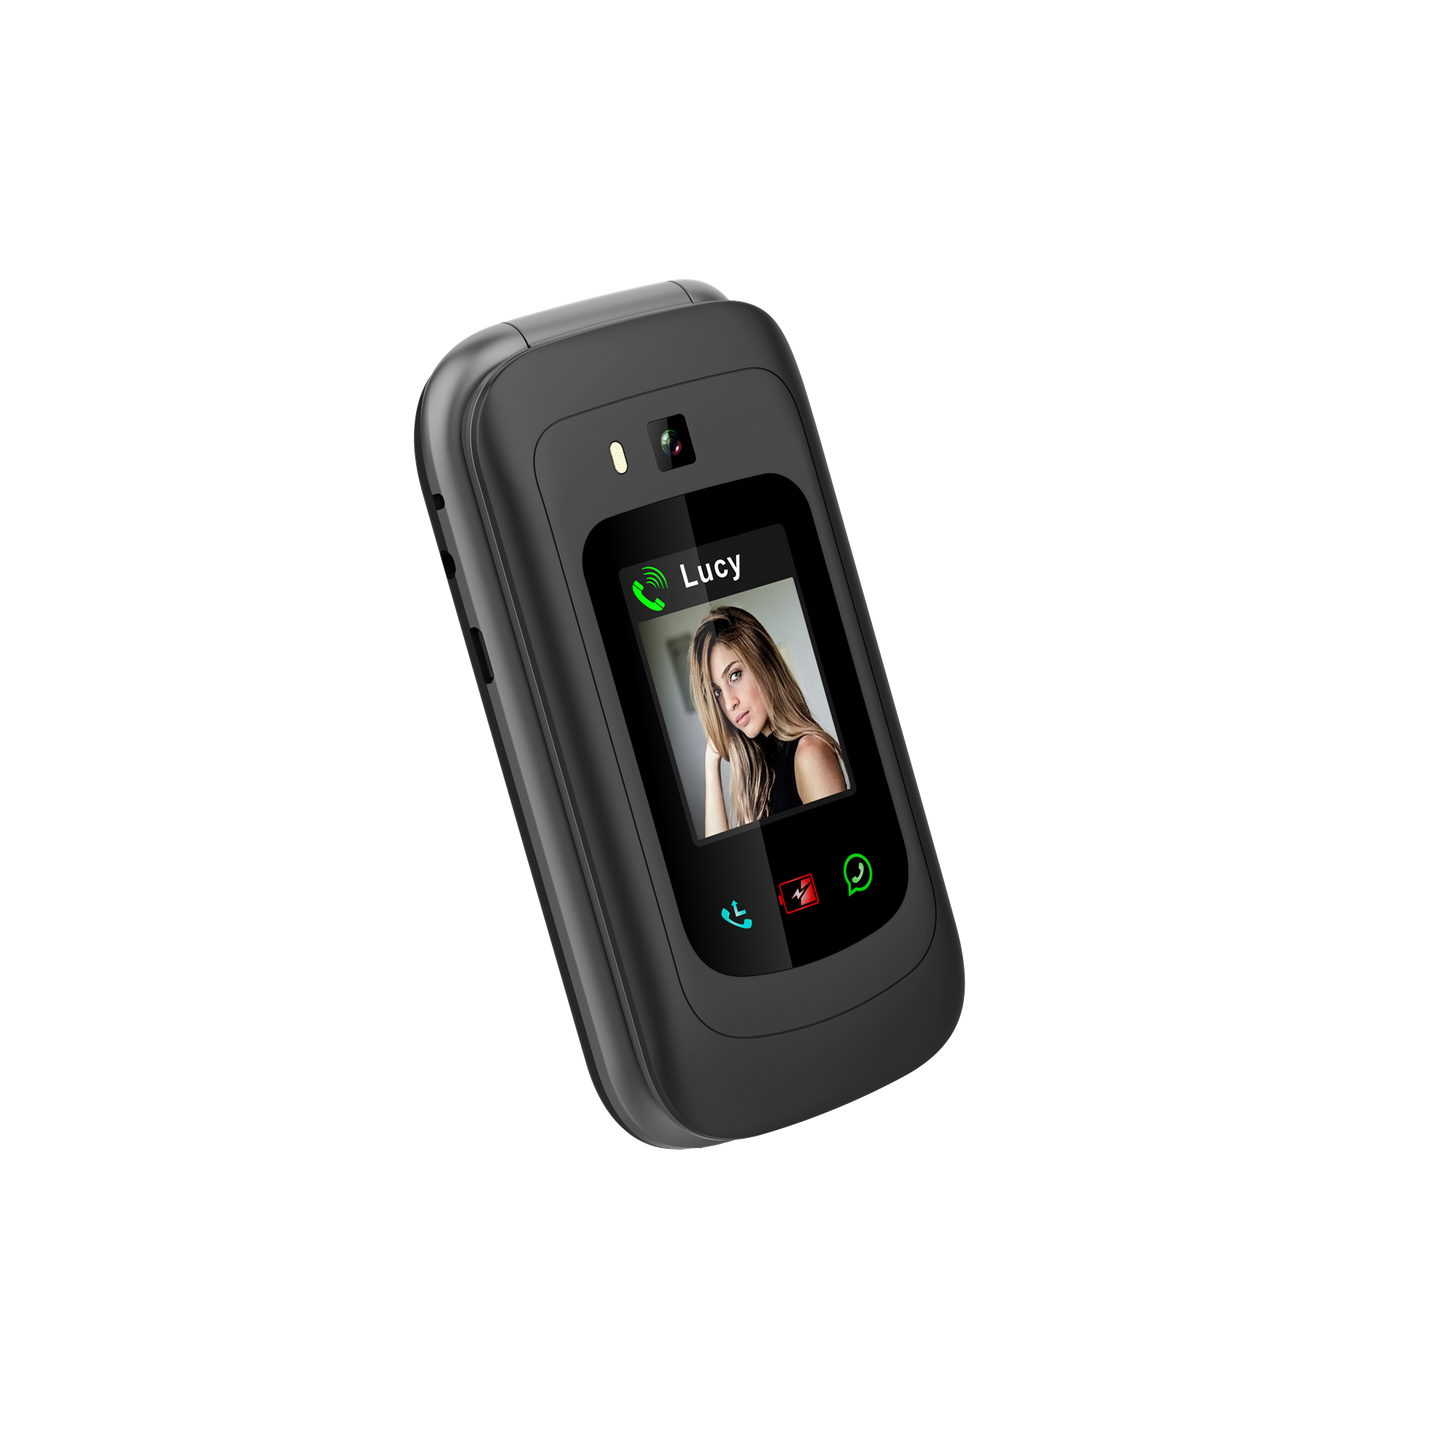 TTfone TT970 4G WhatsApp Flip Senior Big Button Mobile with Smarty Pay As You Go SIM